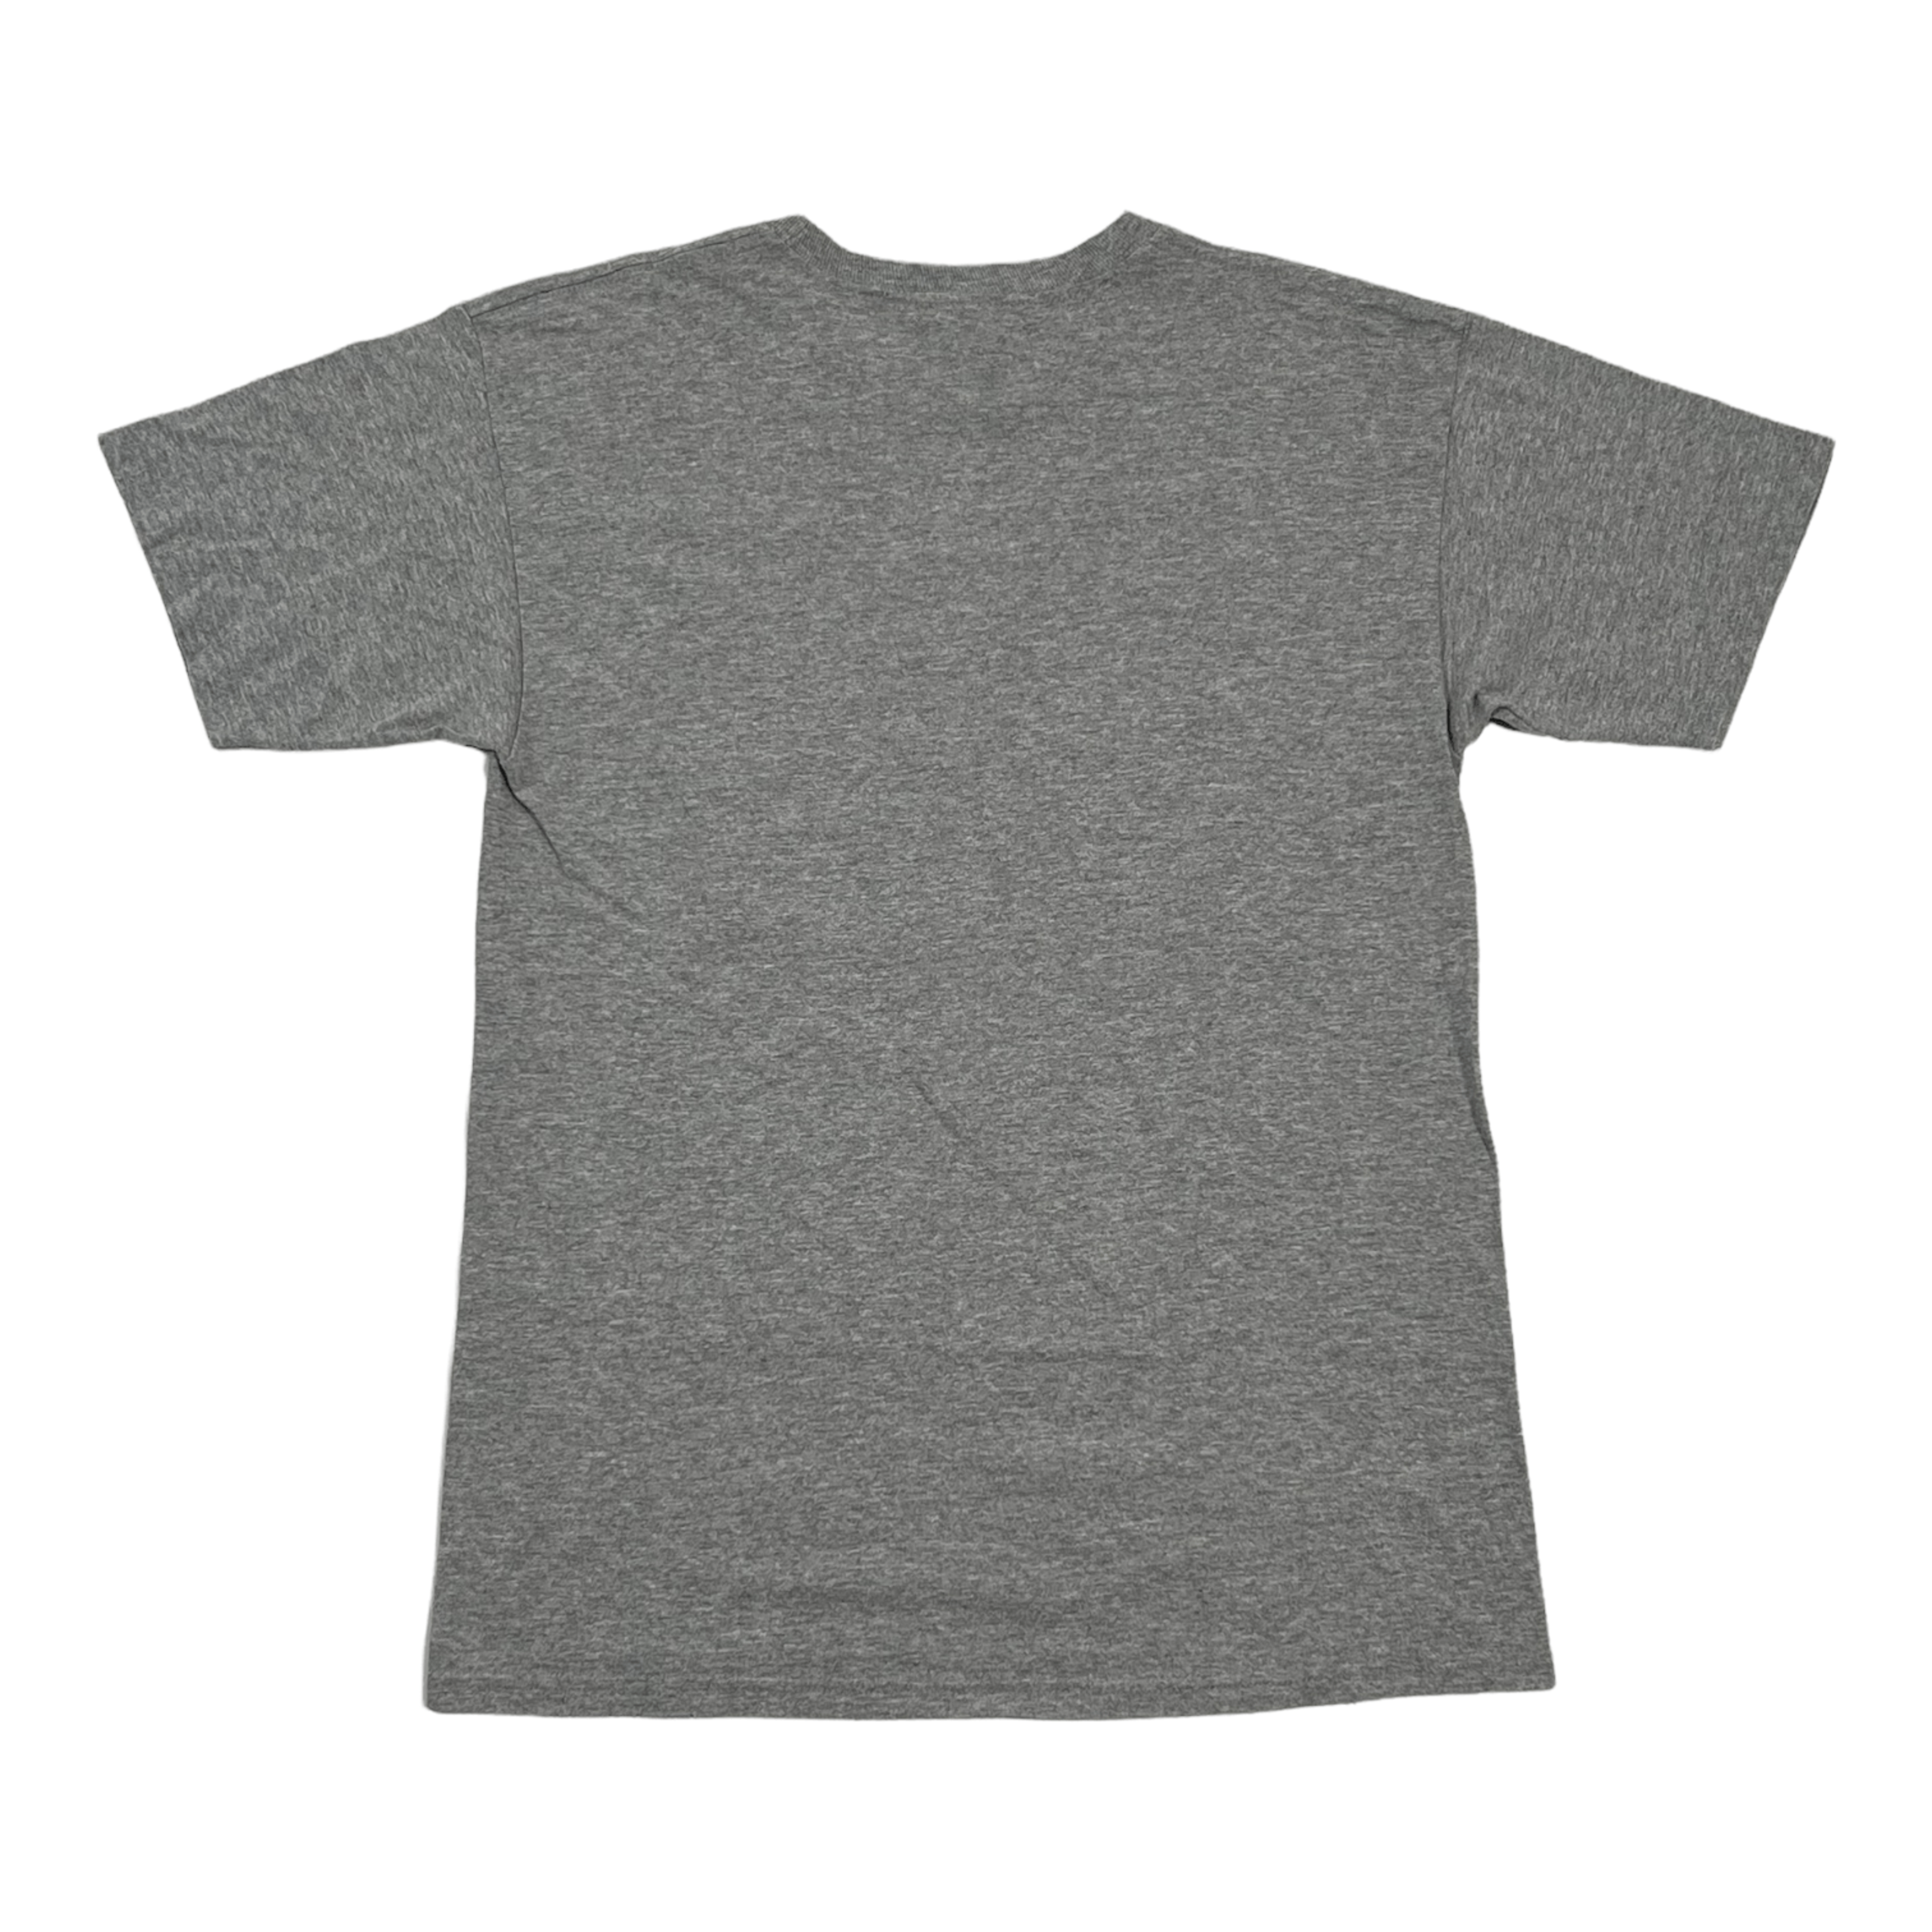 Alternate View 1 of Supreme Three Six Mafia Short Sleeve Tee Shirt Grey Pre-Owned